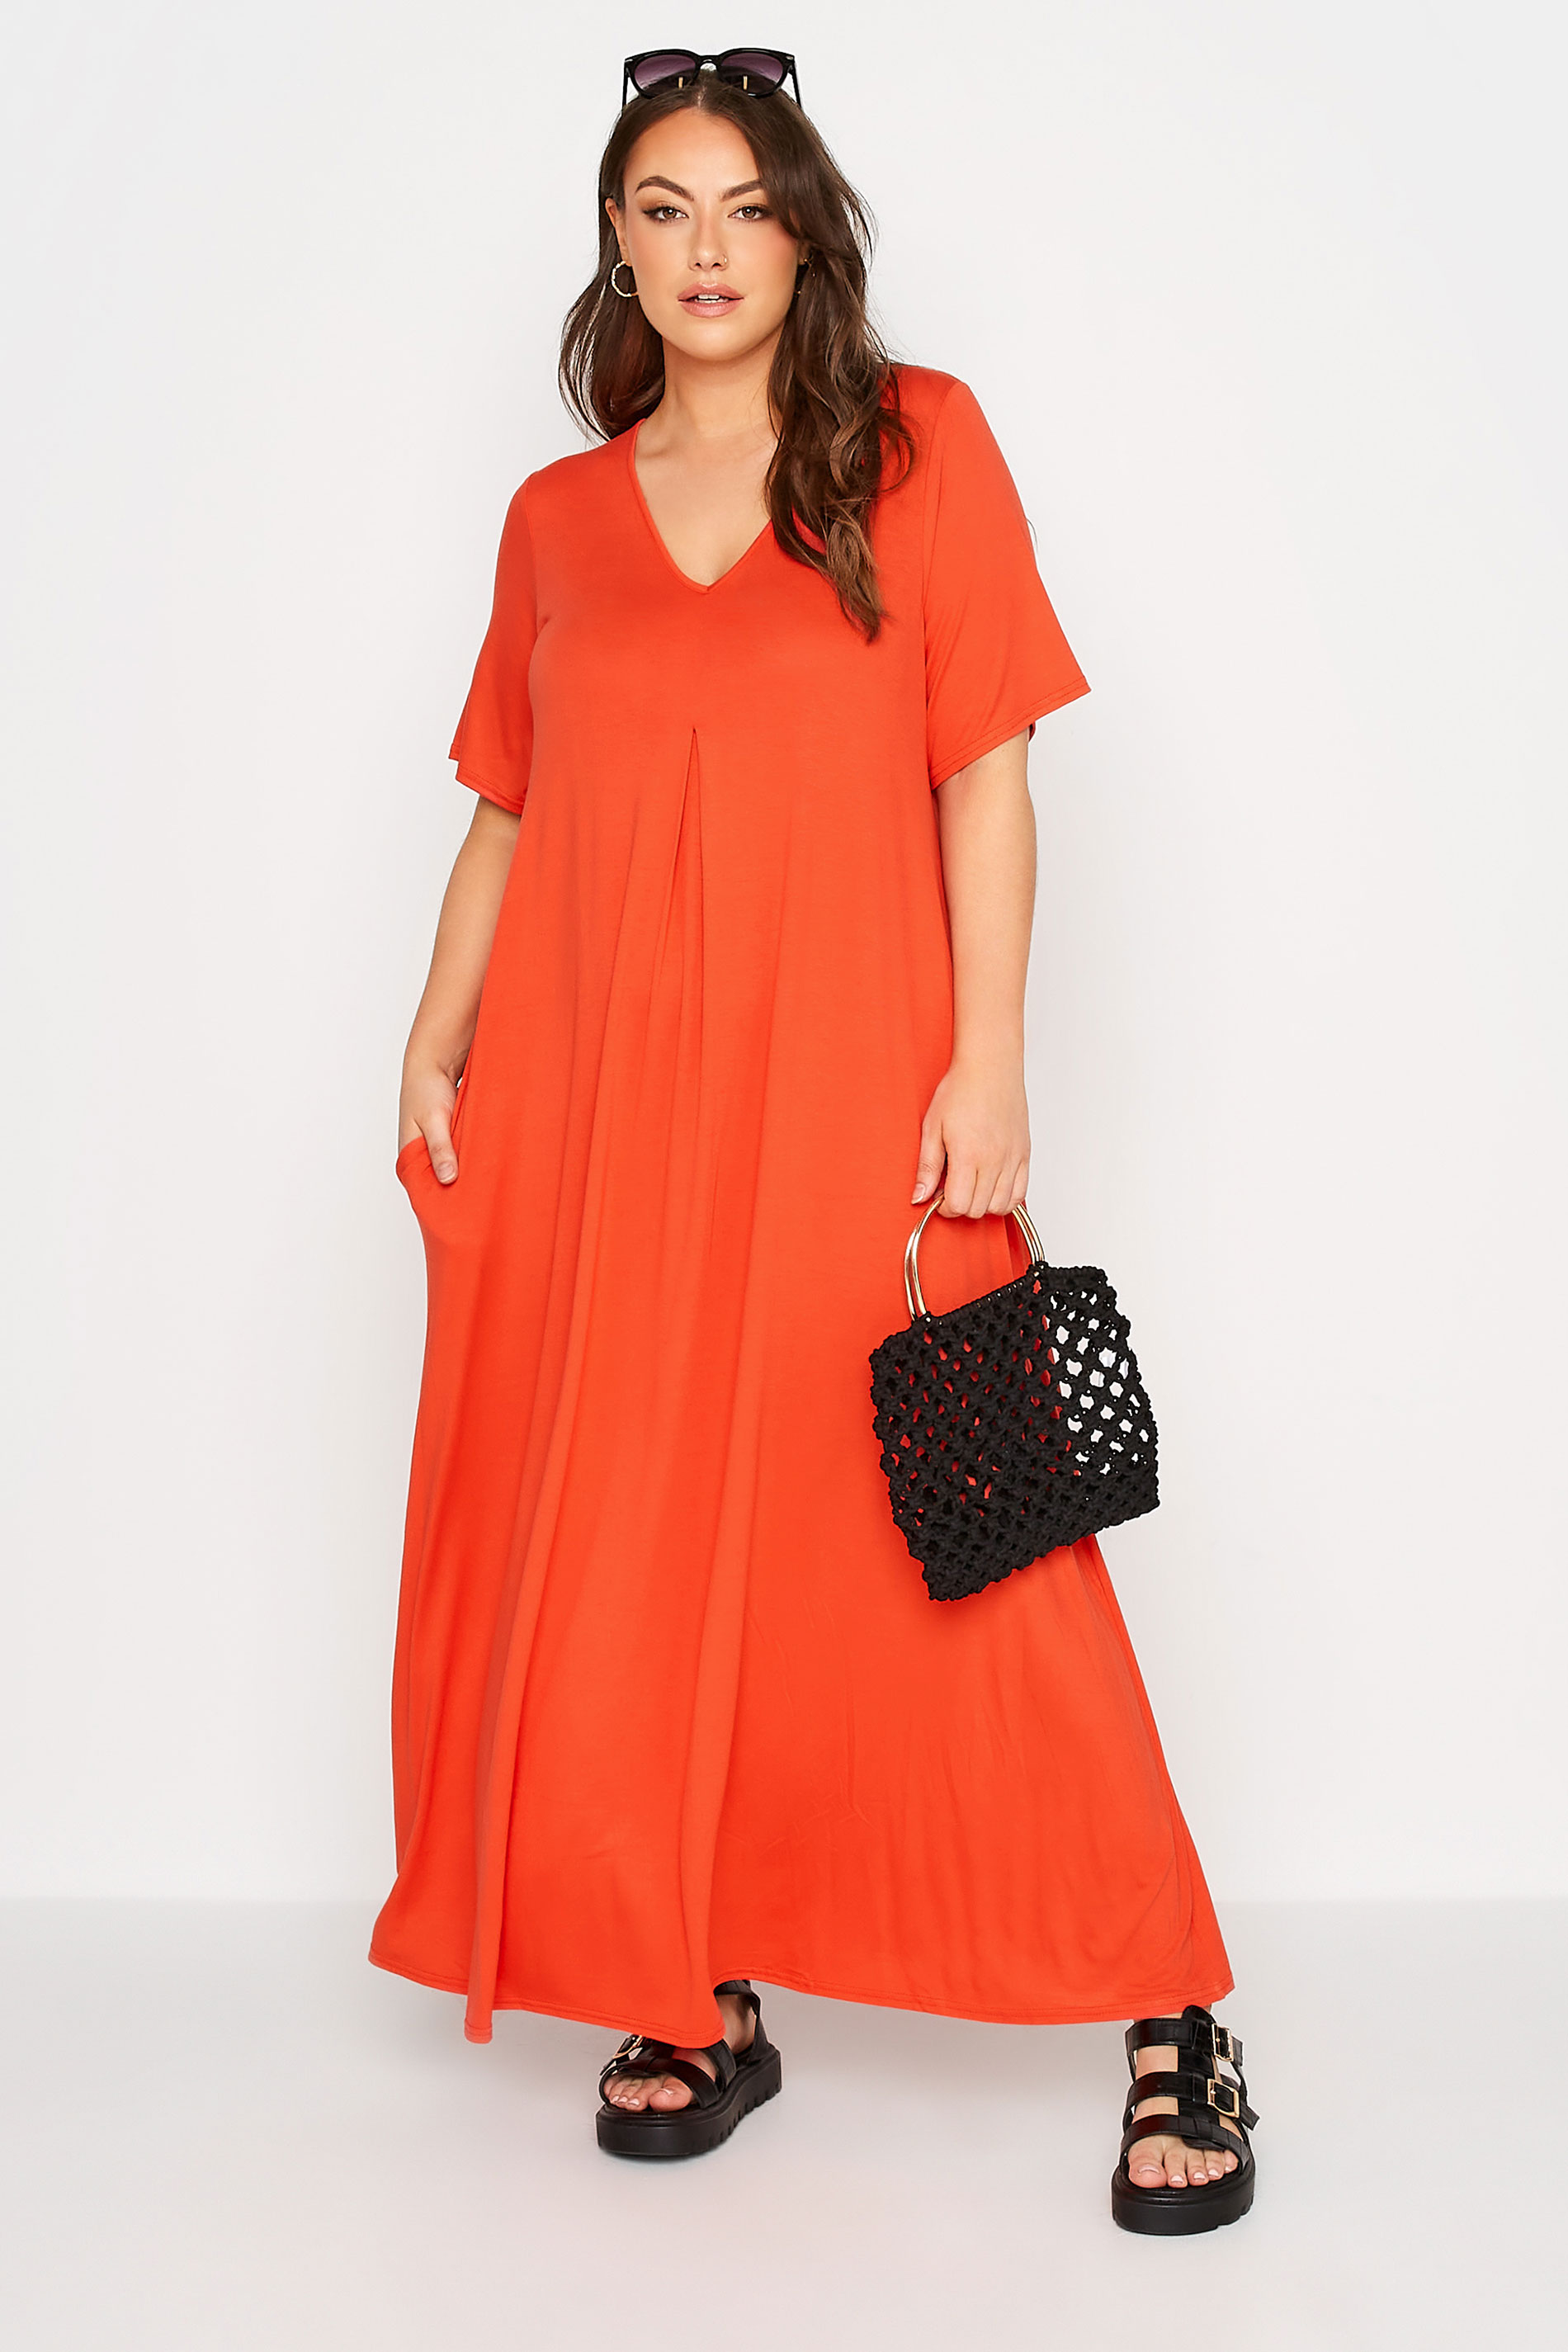 LIMITED COLLECTION Curve Orange Pleat Front Maxi Dress 1